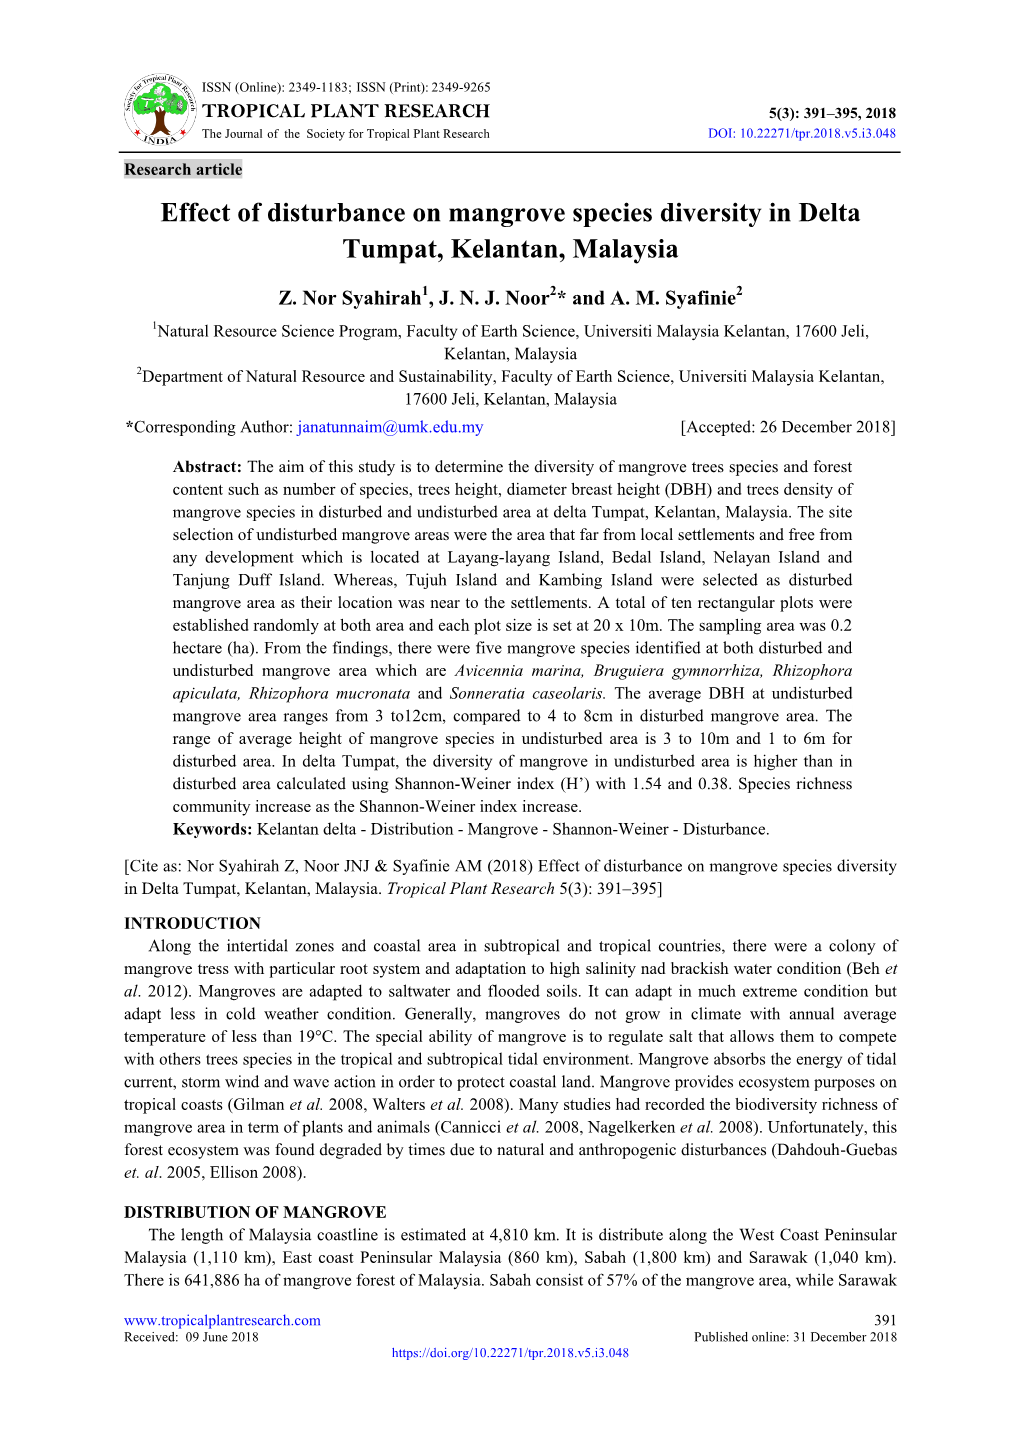 Effect of Disturbance on Mangrove Species Diversity in Delta Tumpat, Kelantan, Malaysia